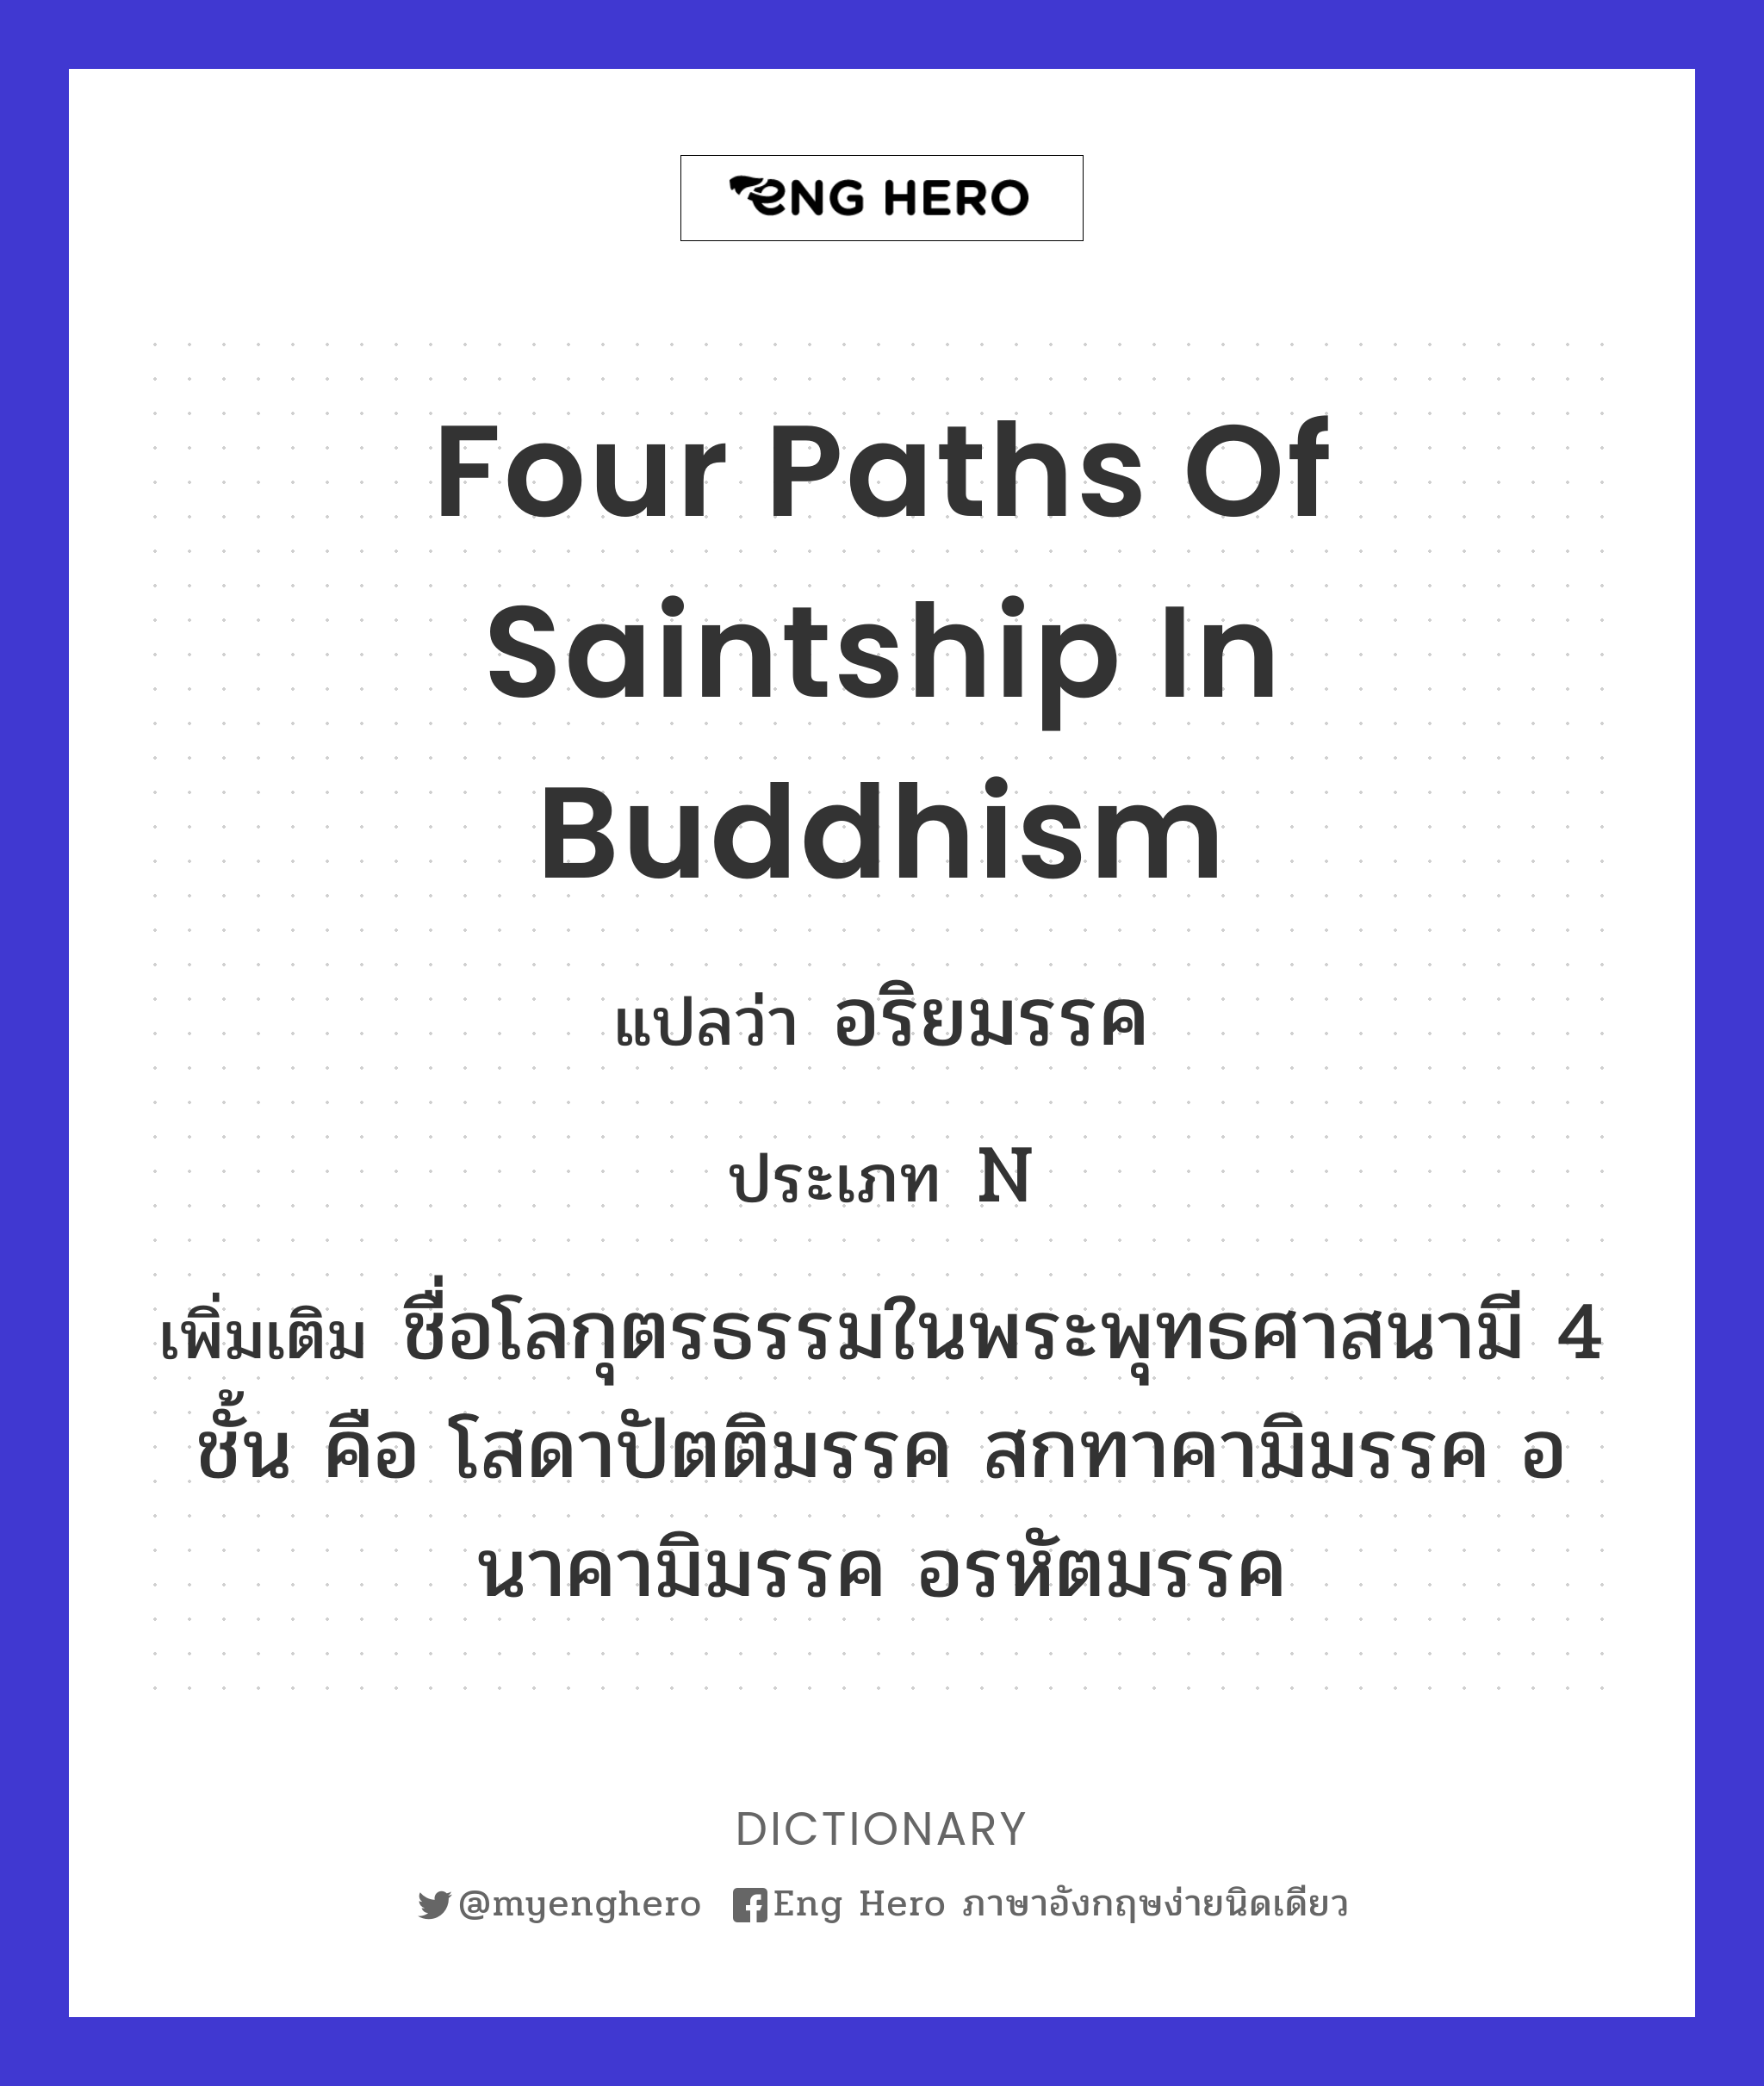 four paths of saintship in Buddhism